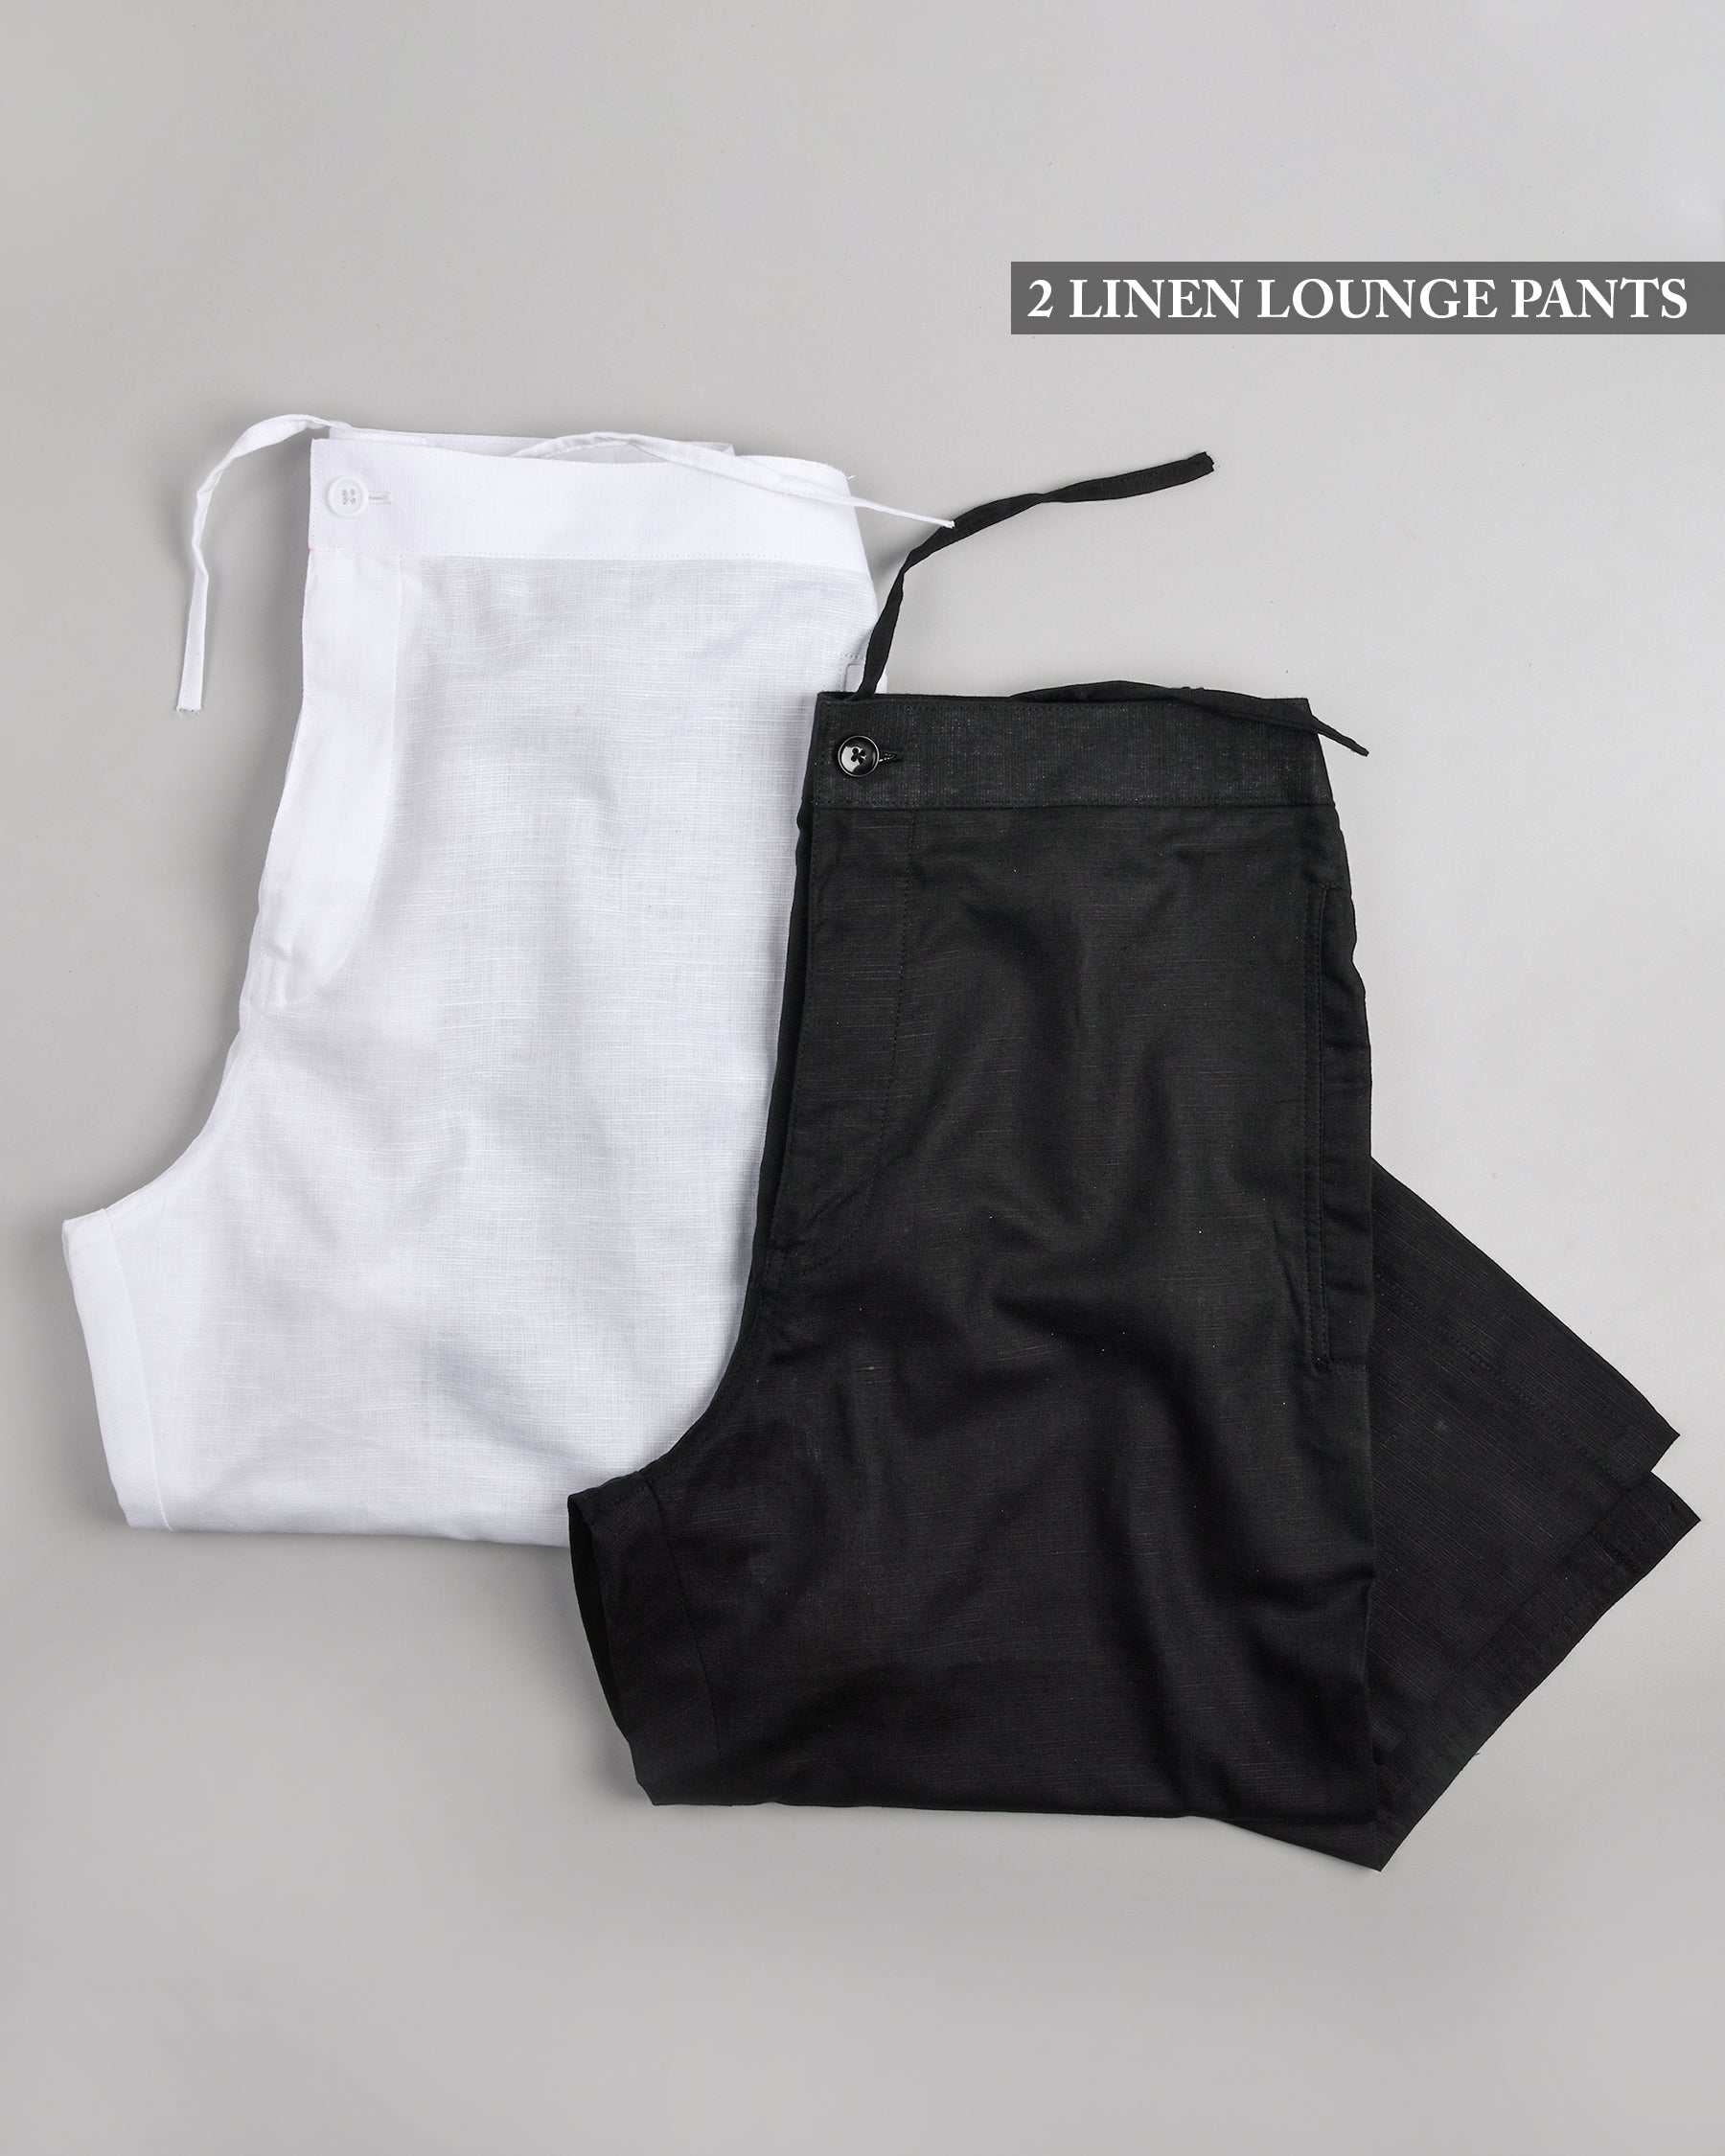 Black and White Premium Linen Lounge Pants LP077-32, LP077-44, LP077-38, LP077-30, LP077-34, LP077-42, LP077-28, LP077-40, LP077-36